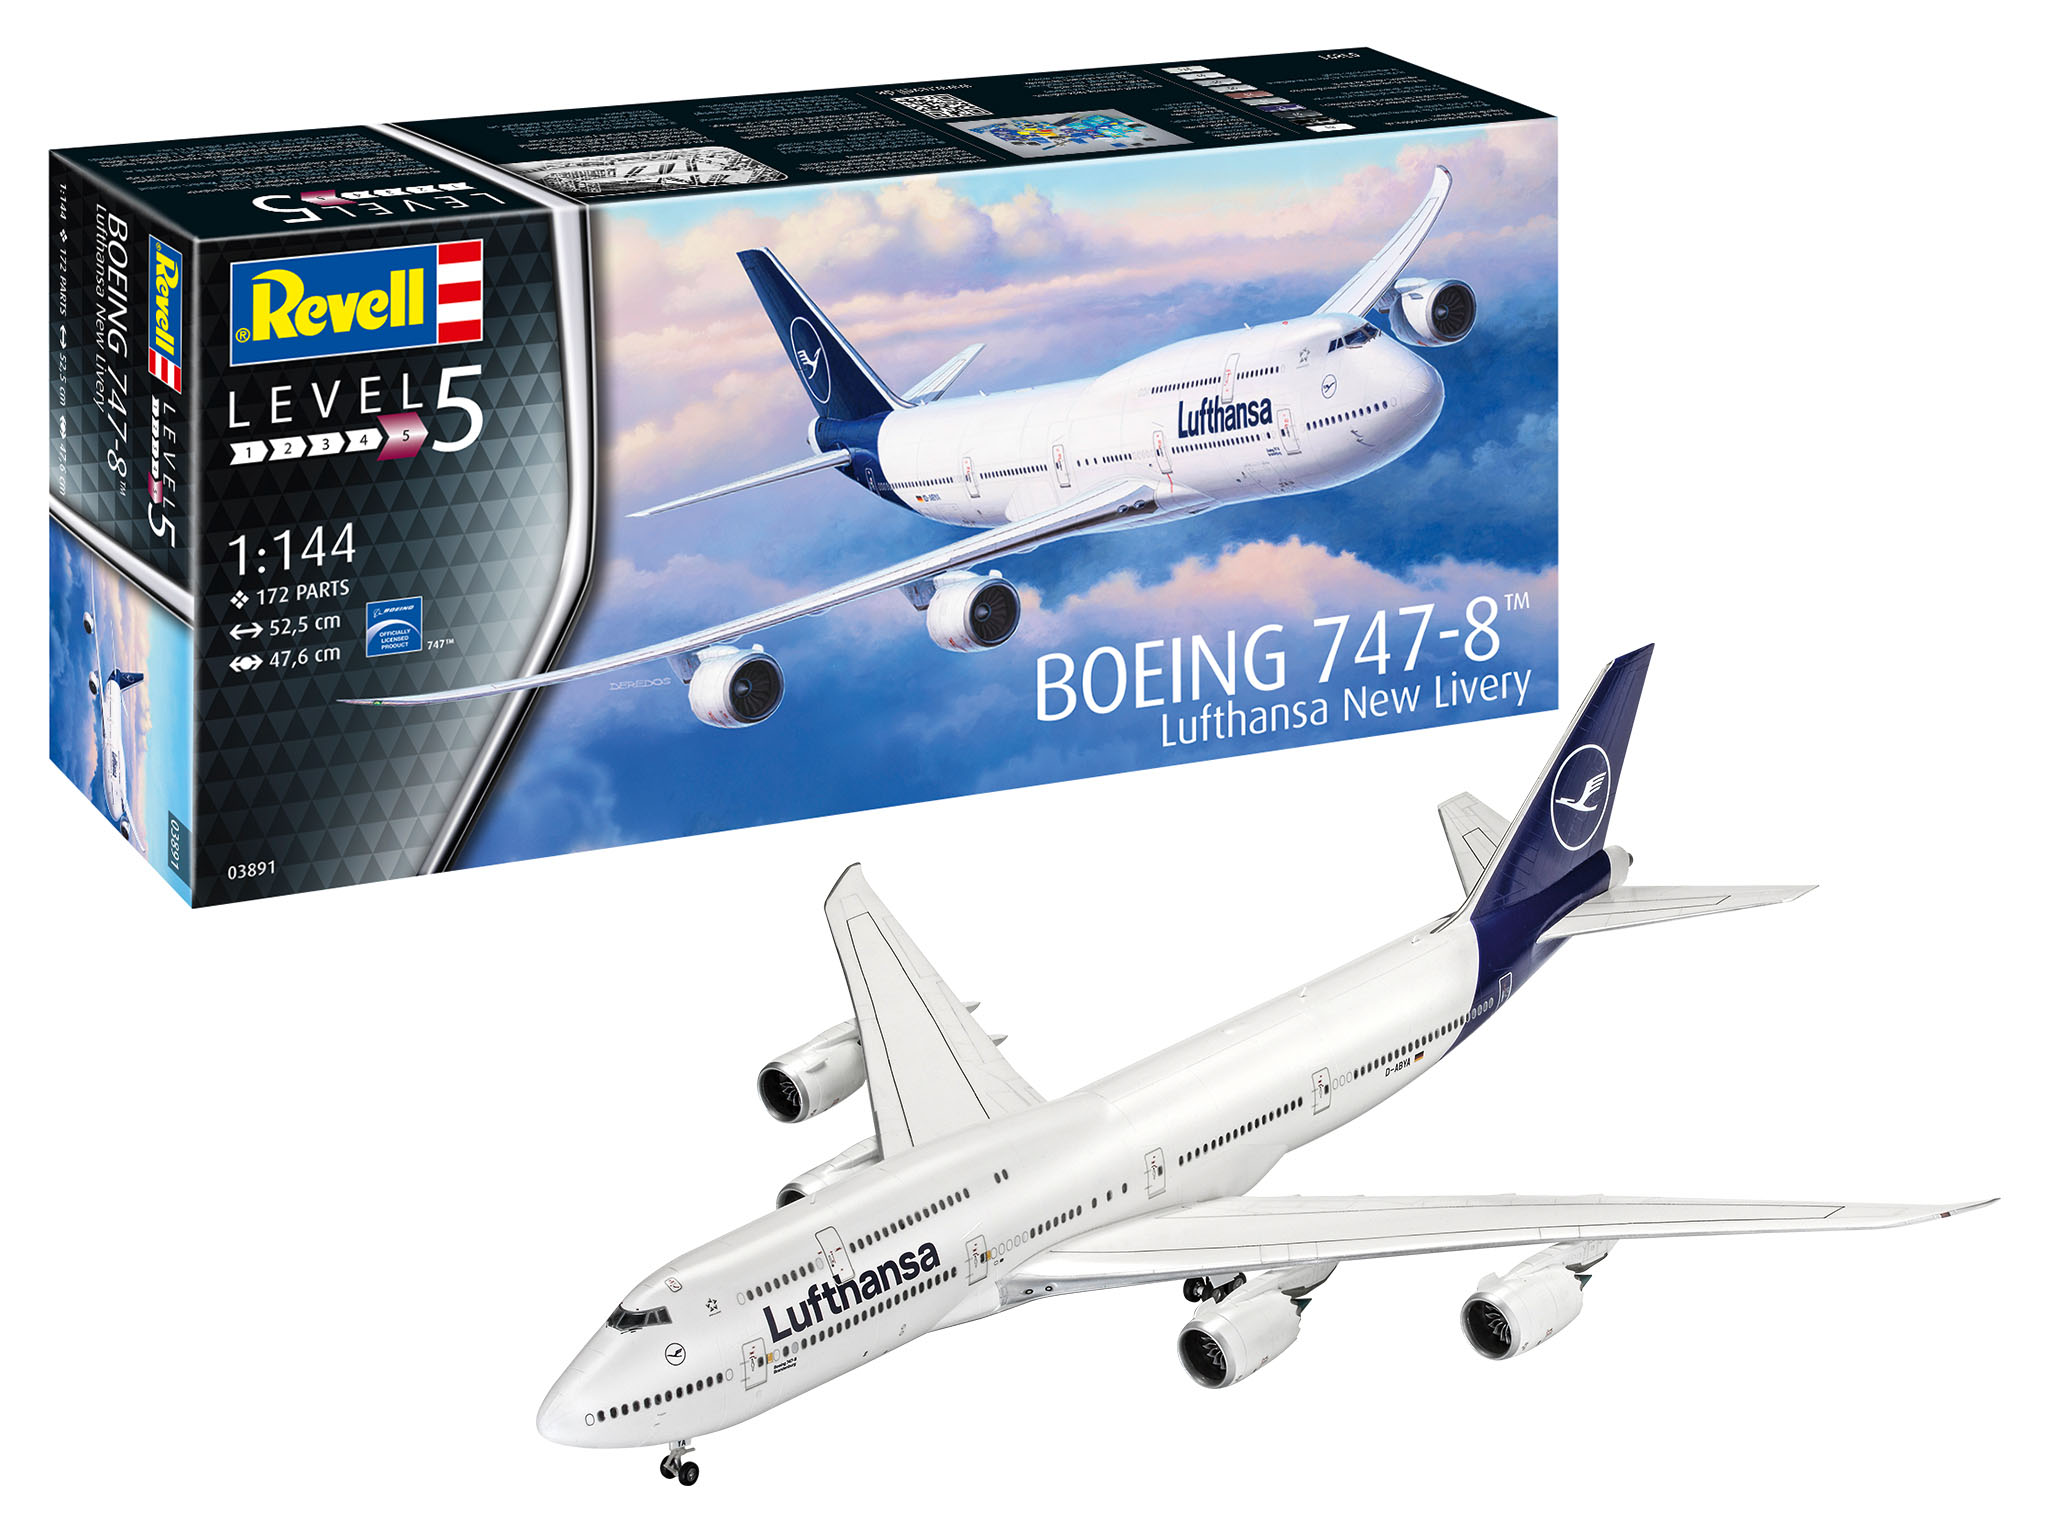 revell-03891-Boeing-747-8-Lufthansa-New-Livery